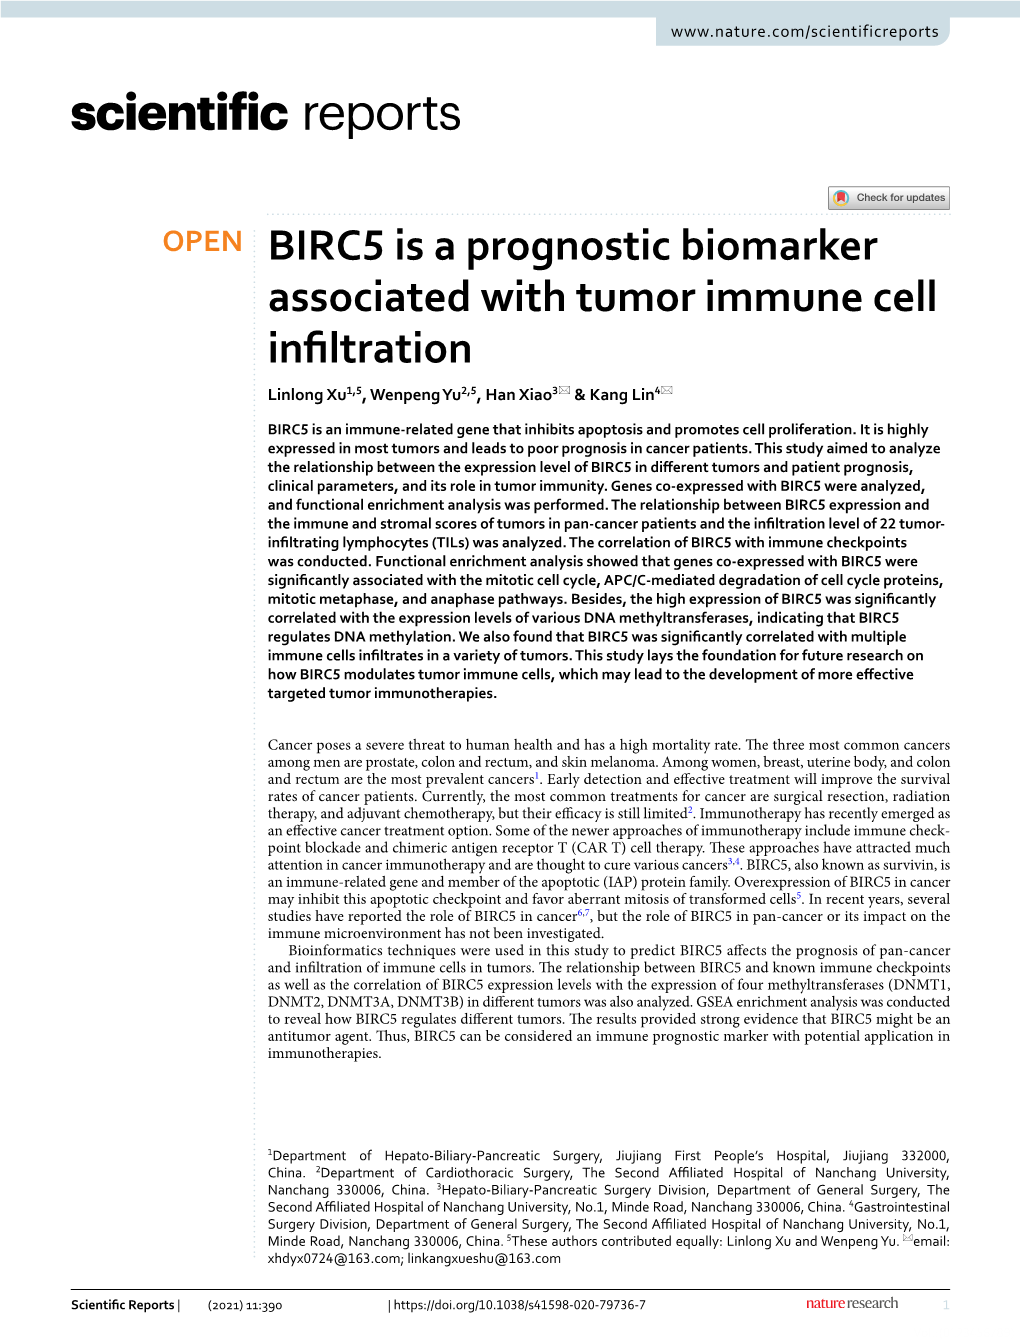 BIRC5 Is a Prognostic Biomarker Associated with Tumor Immune Cell Infltration Linlong Xu1,5, Wenpeng Yu2,5, Han Xiao3* & Kang Lin4*